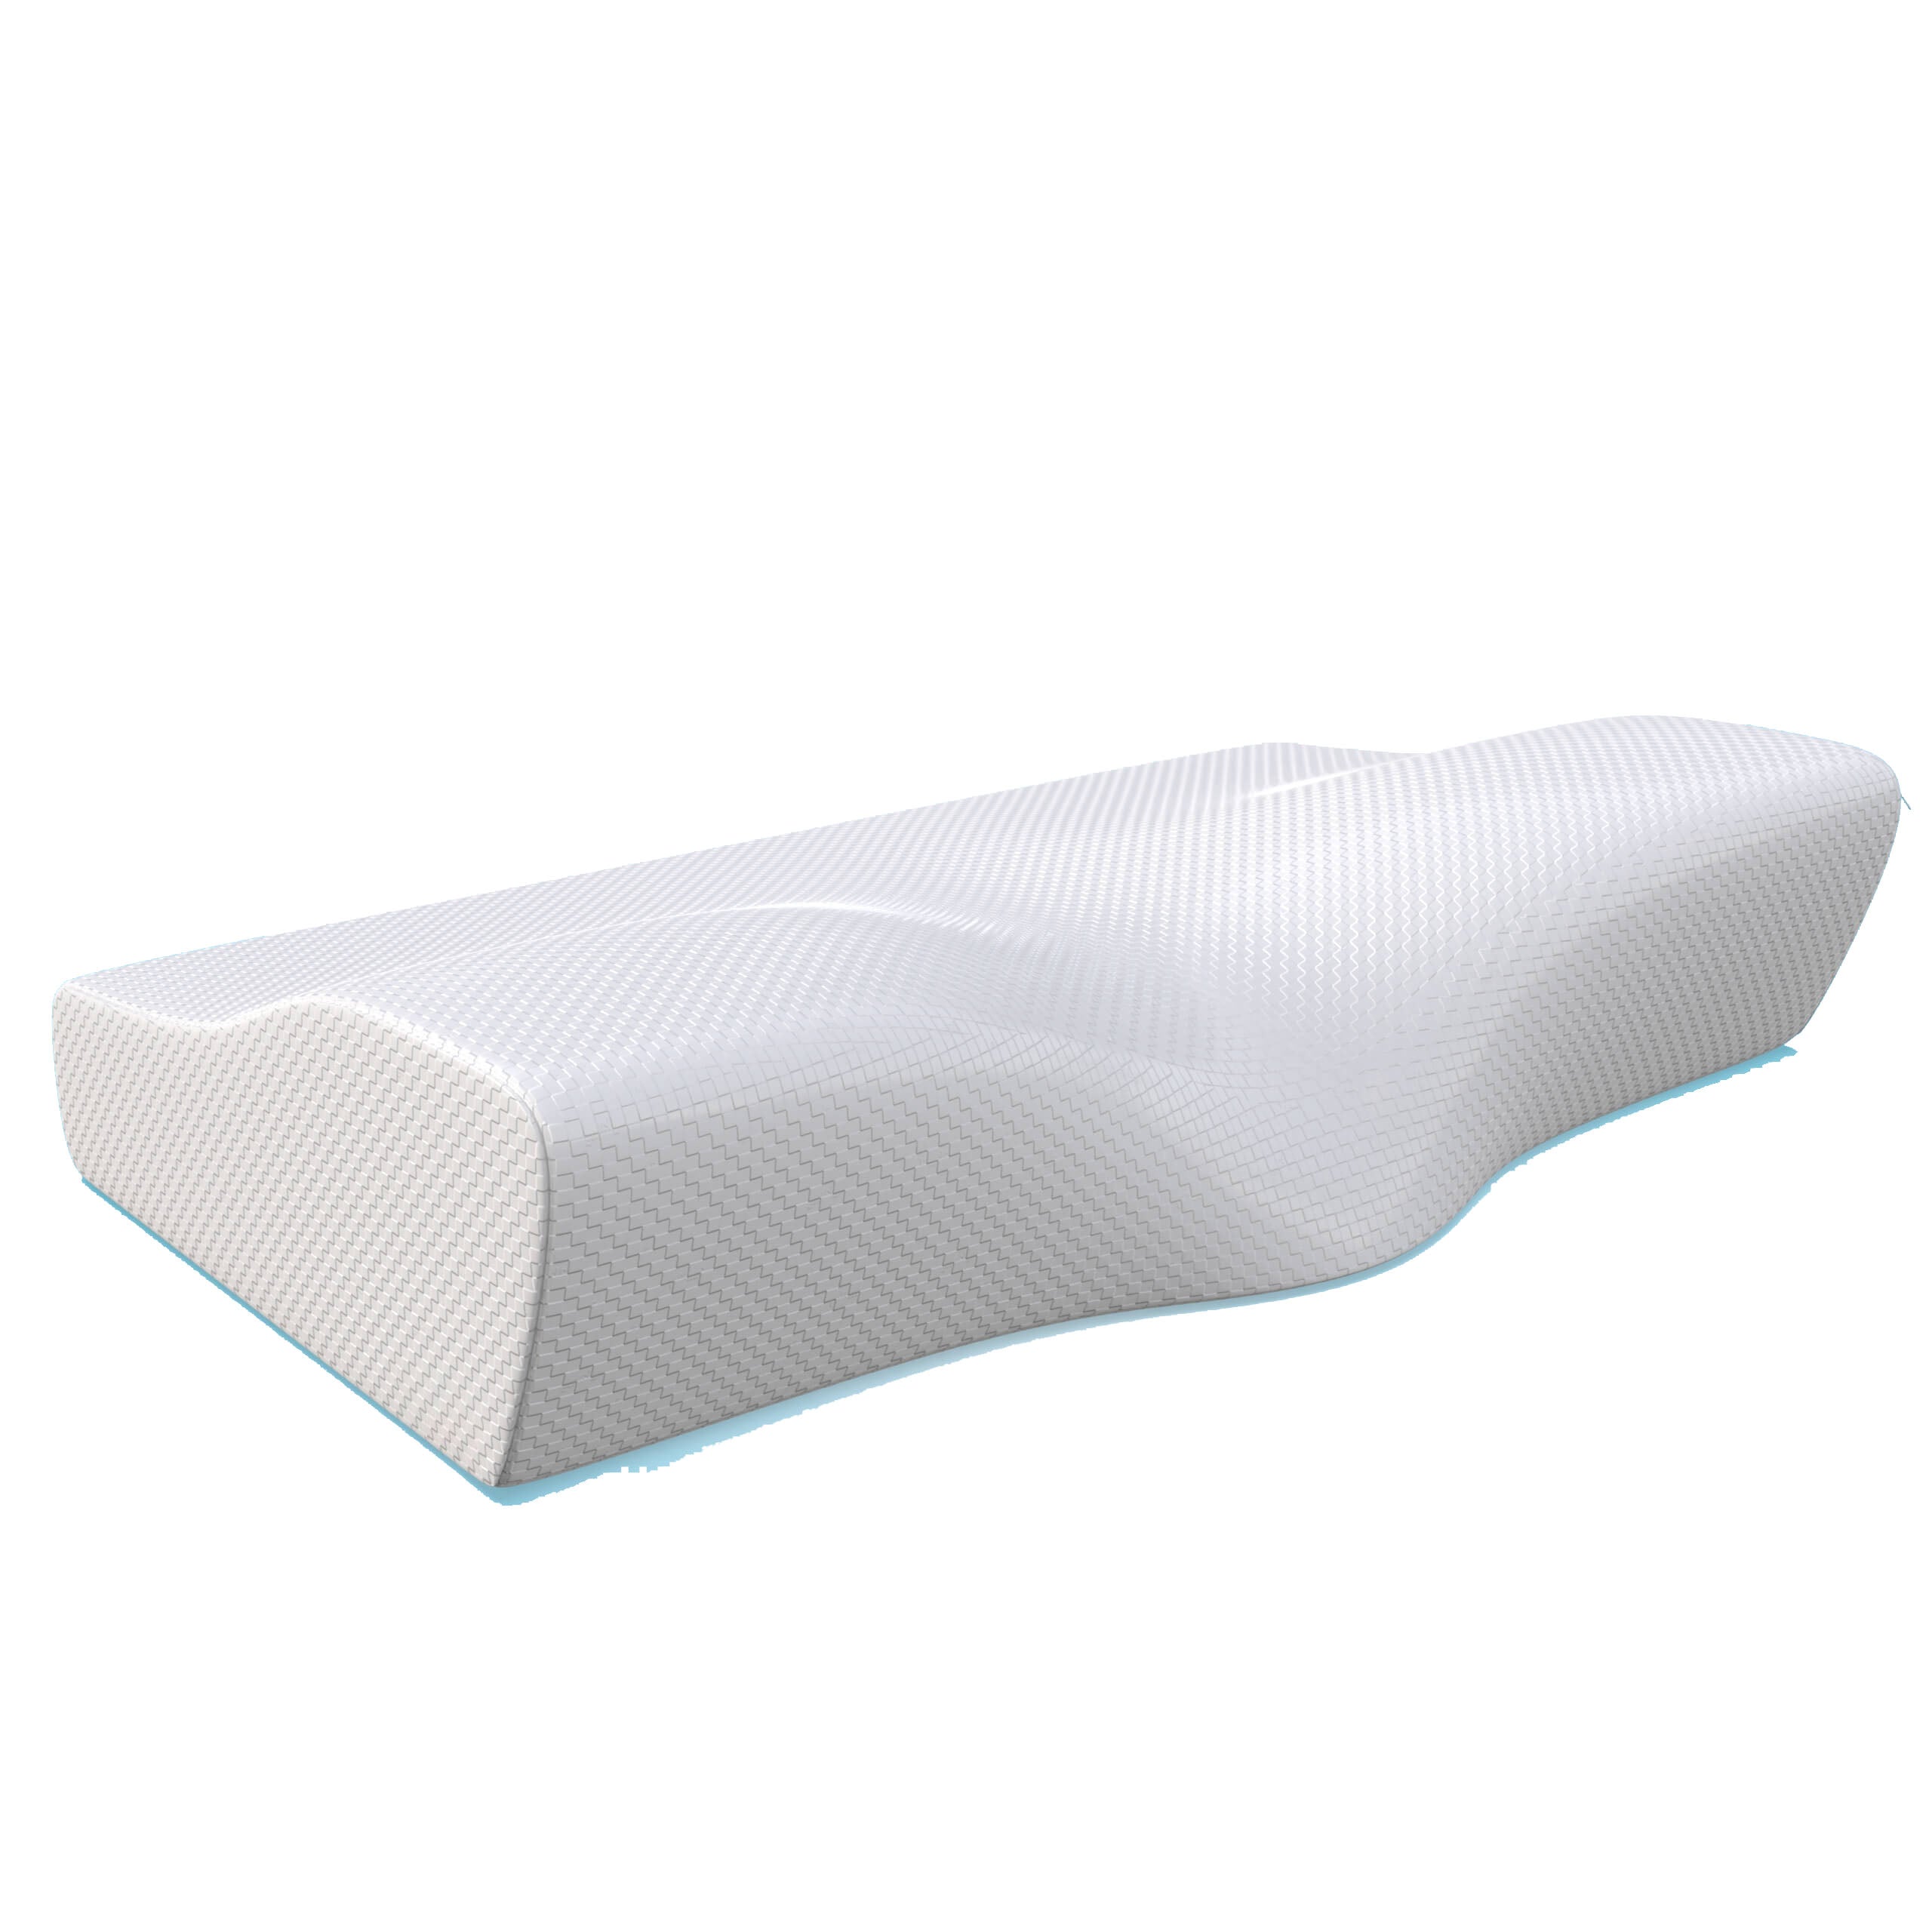 DreamAlign: Orthopedic Sleep Support Pillow